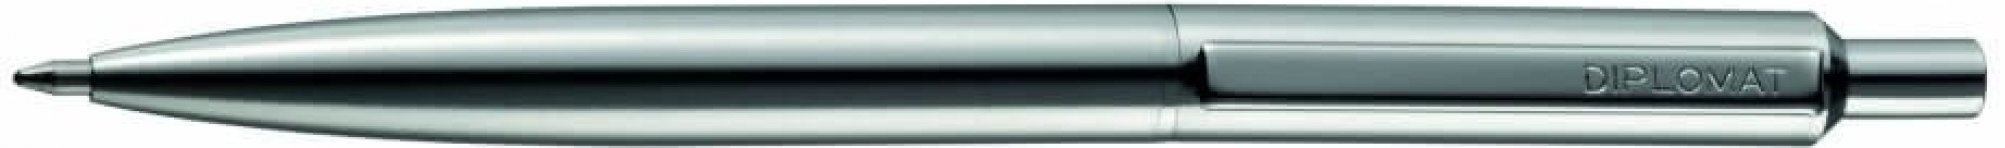 Ручка шариковая Diplomat Equipment stainless steel